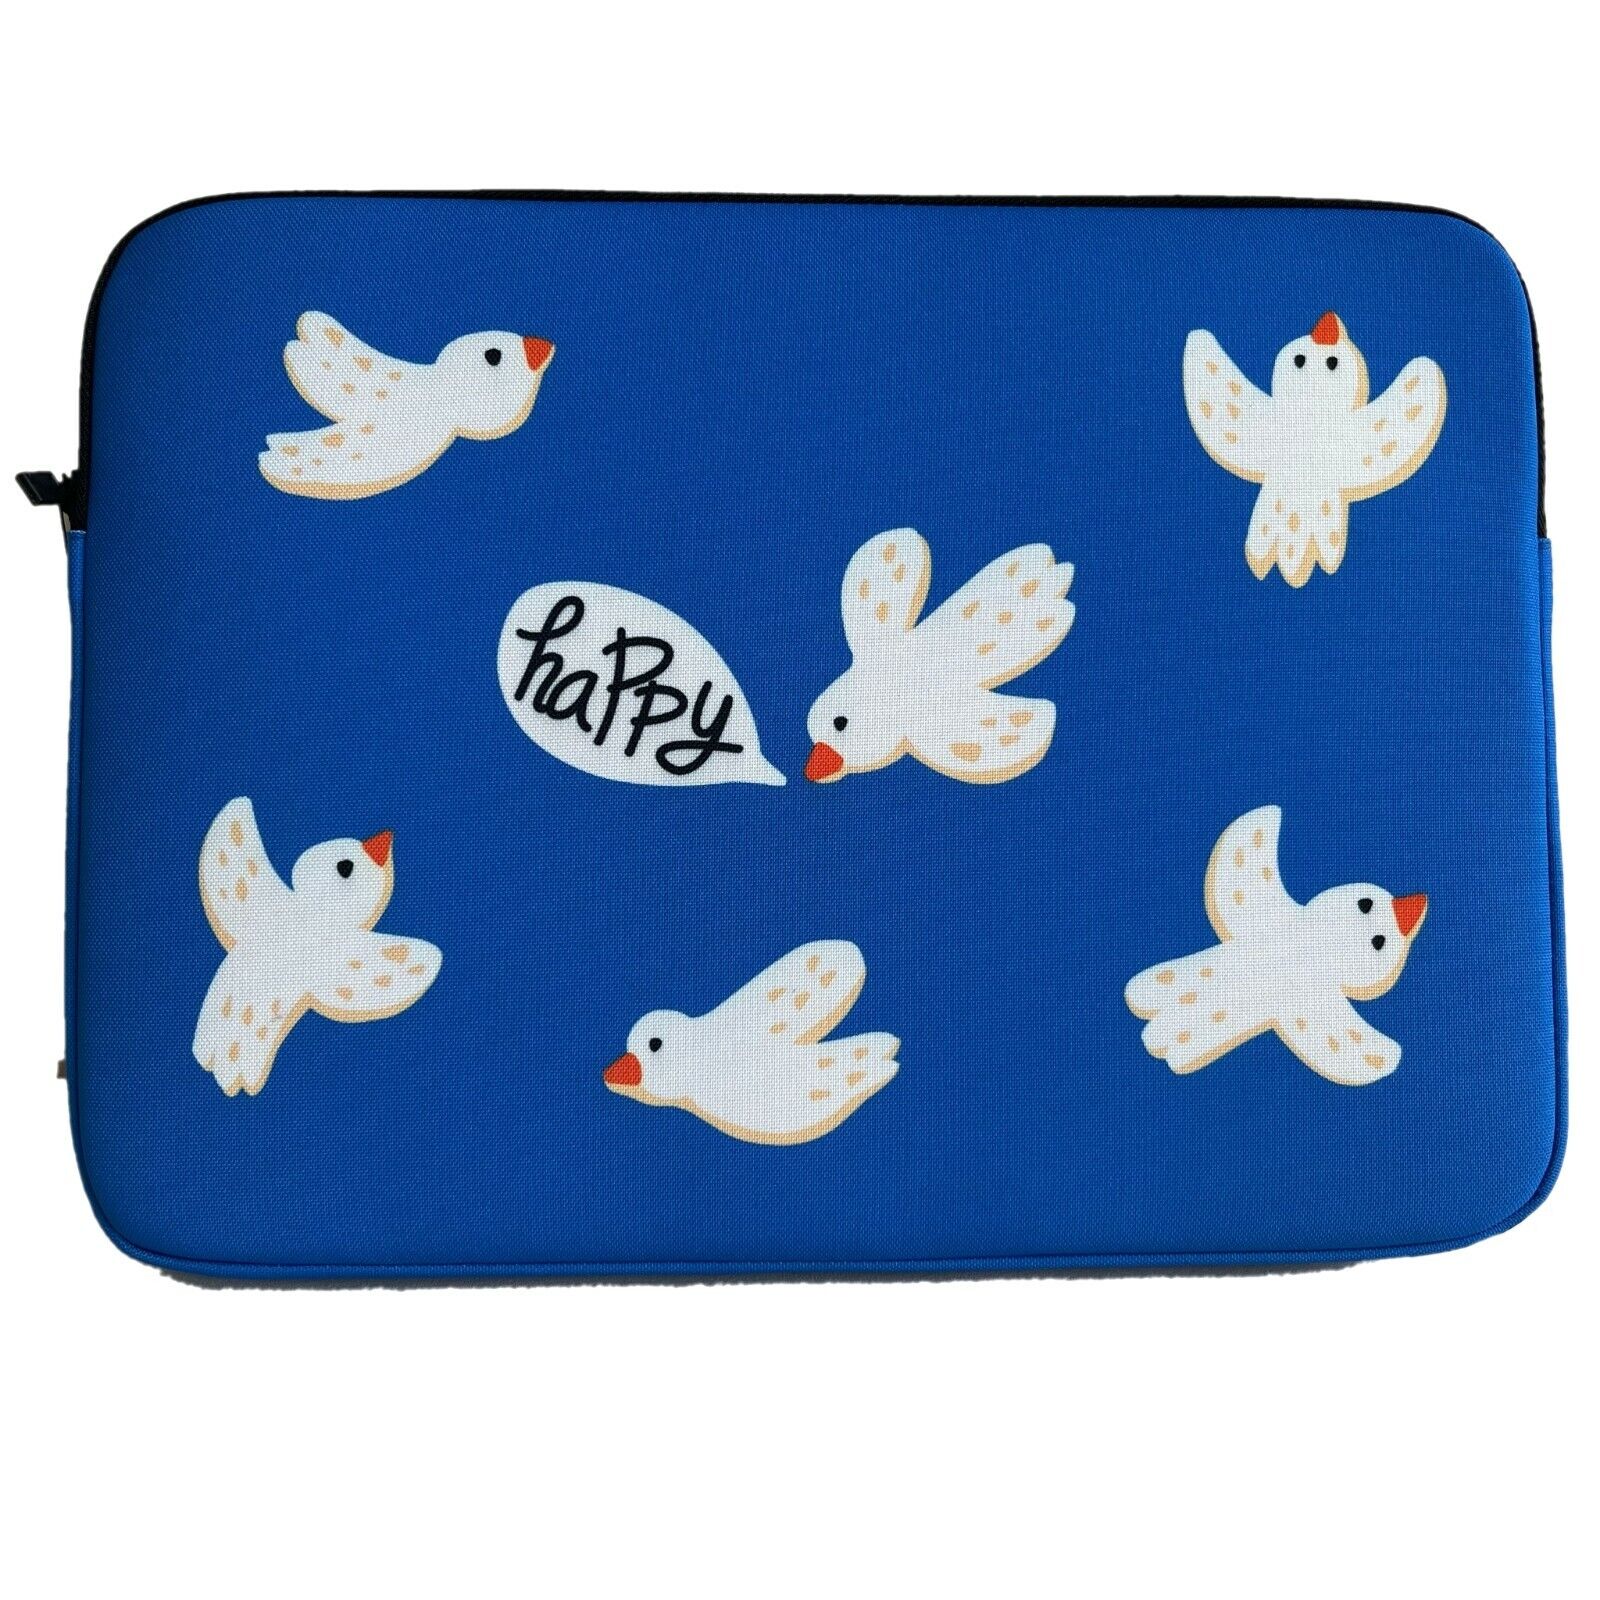 Laptop Sleeve Pouch Case 13inch Macbook Nice Gorgeous Blue Bird Design in Korea